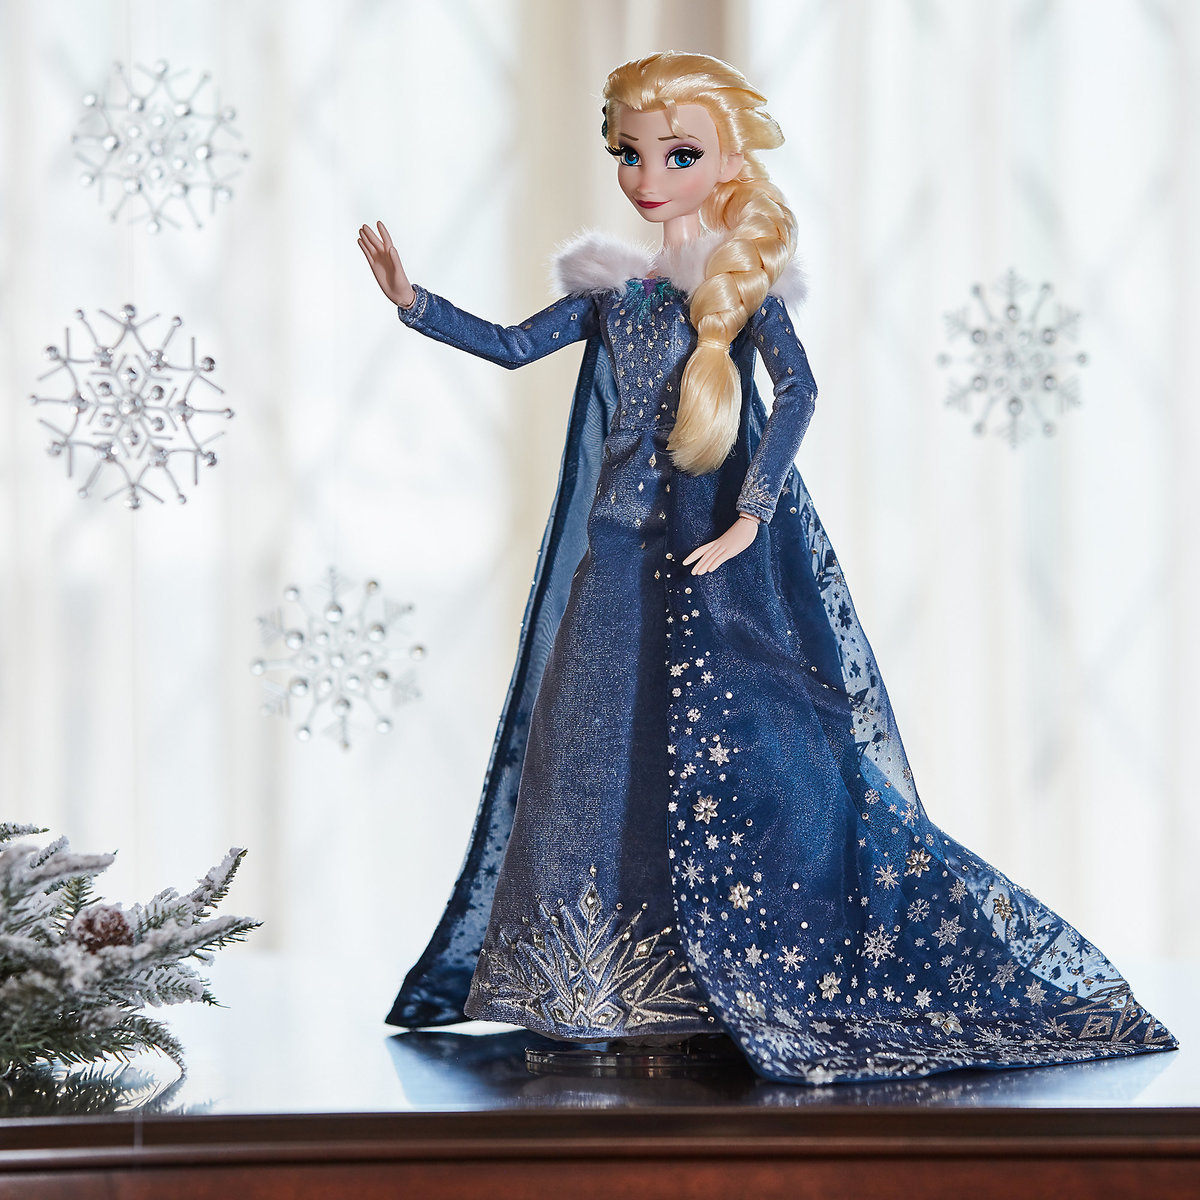 Disney Store Limited Edition Doll Anna Olaf's Frozen Adventure Elsa LE 17" Doll